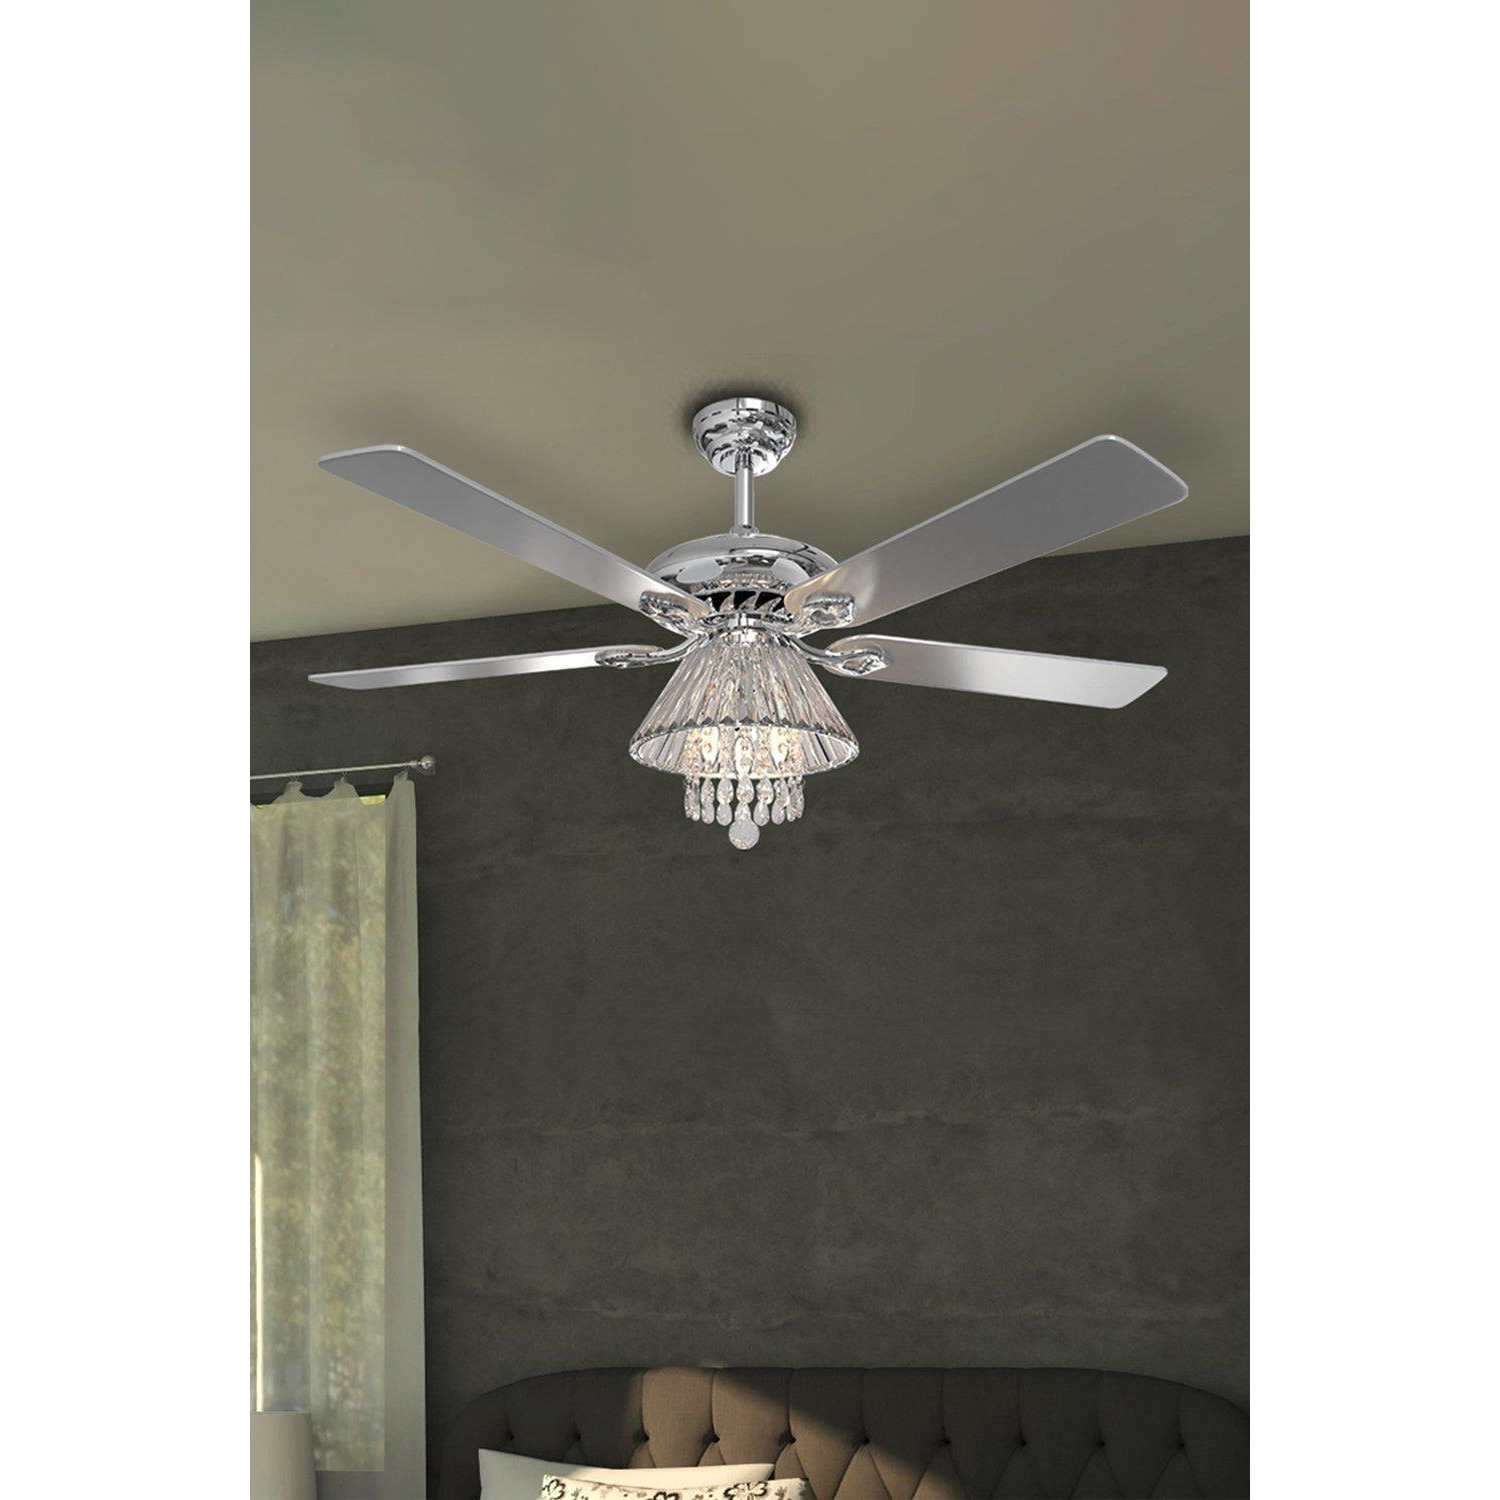 5 Blade Modern Crystal Ceiling Fan Light - image 1